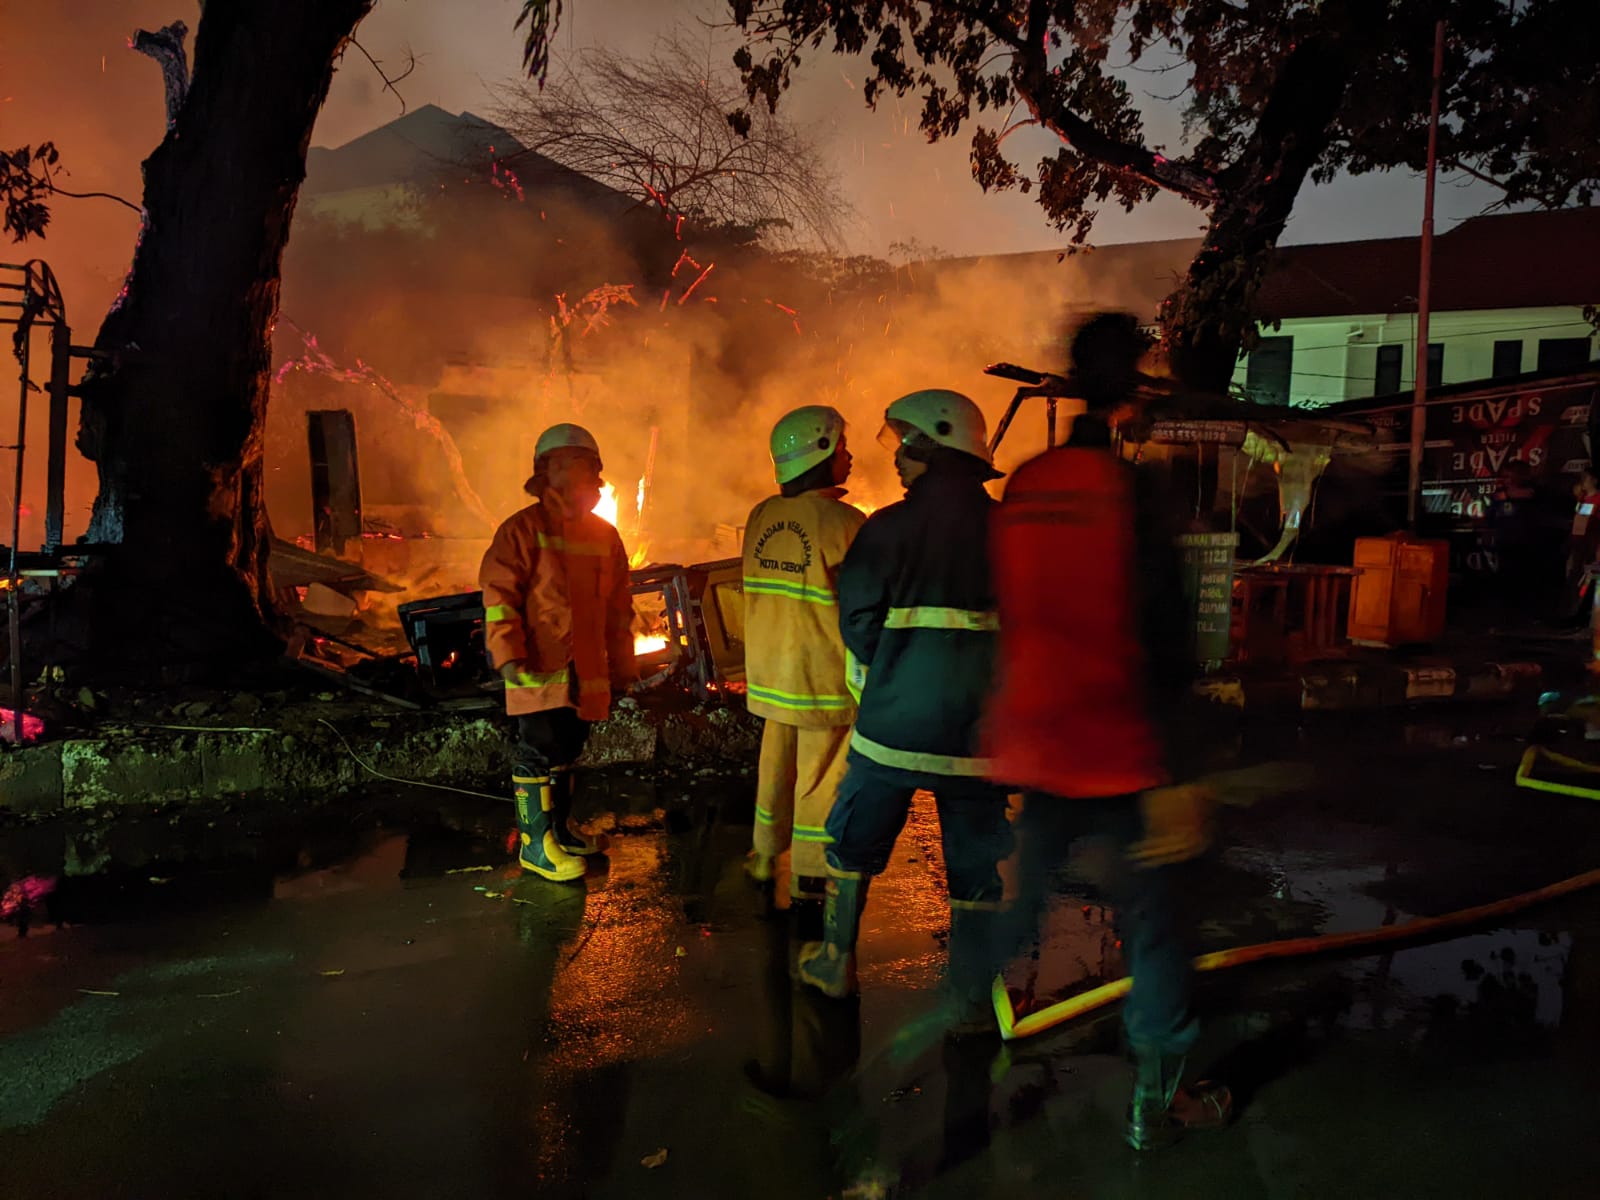 Kebakaran di Jalan Kebumen Belakang BAT, Diduga Sengaja Dibakar Orang